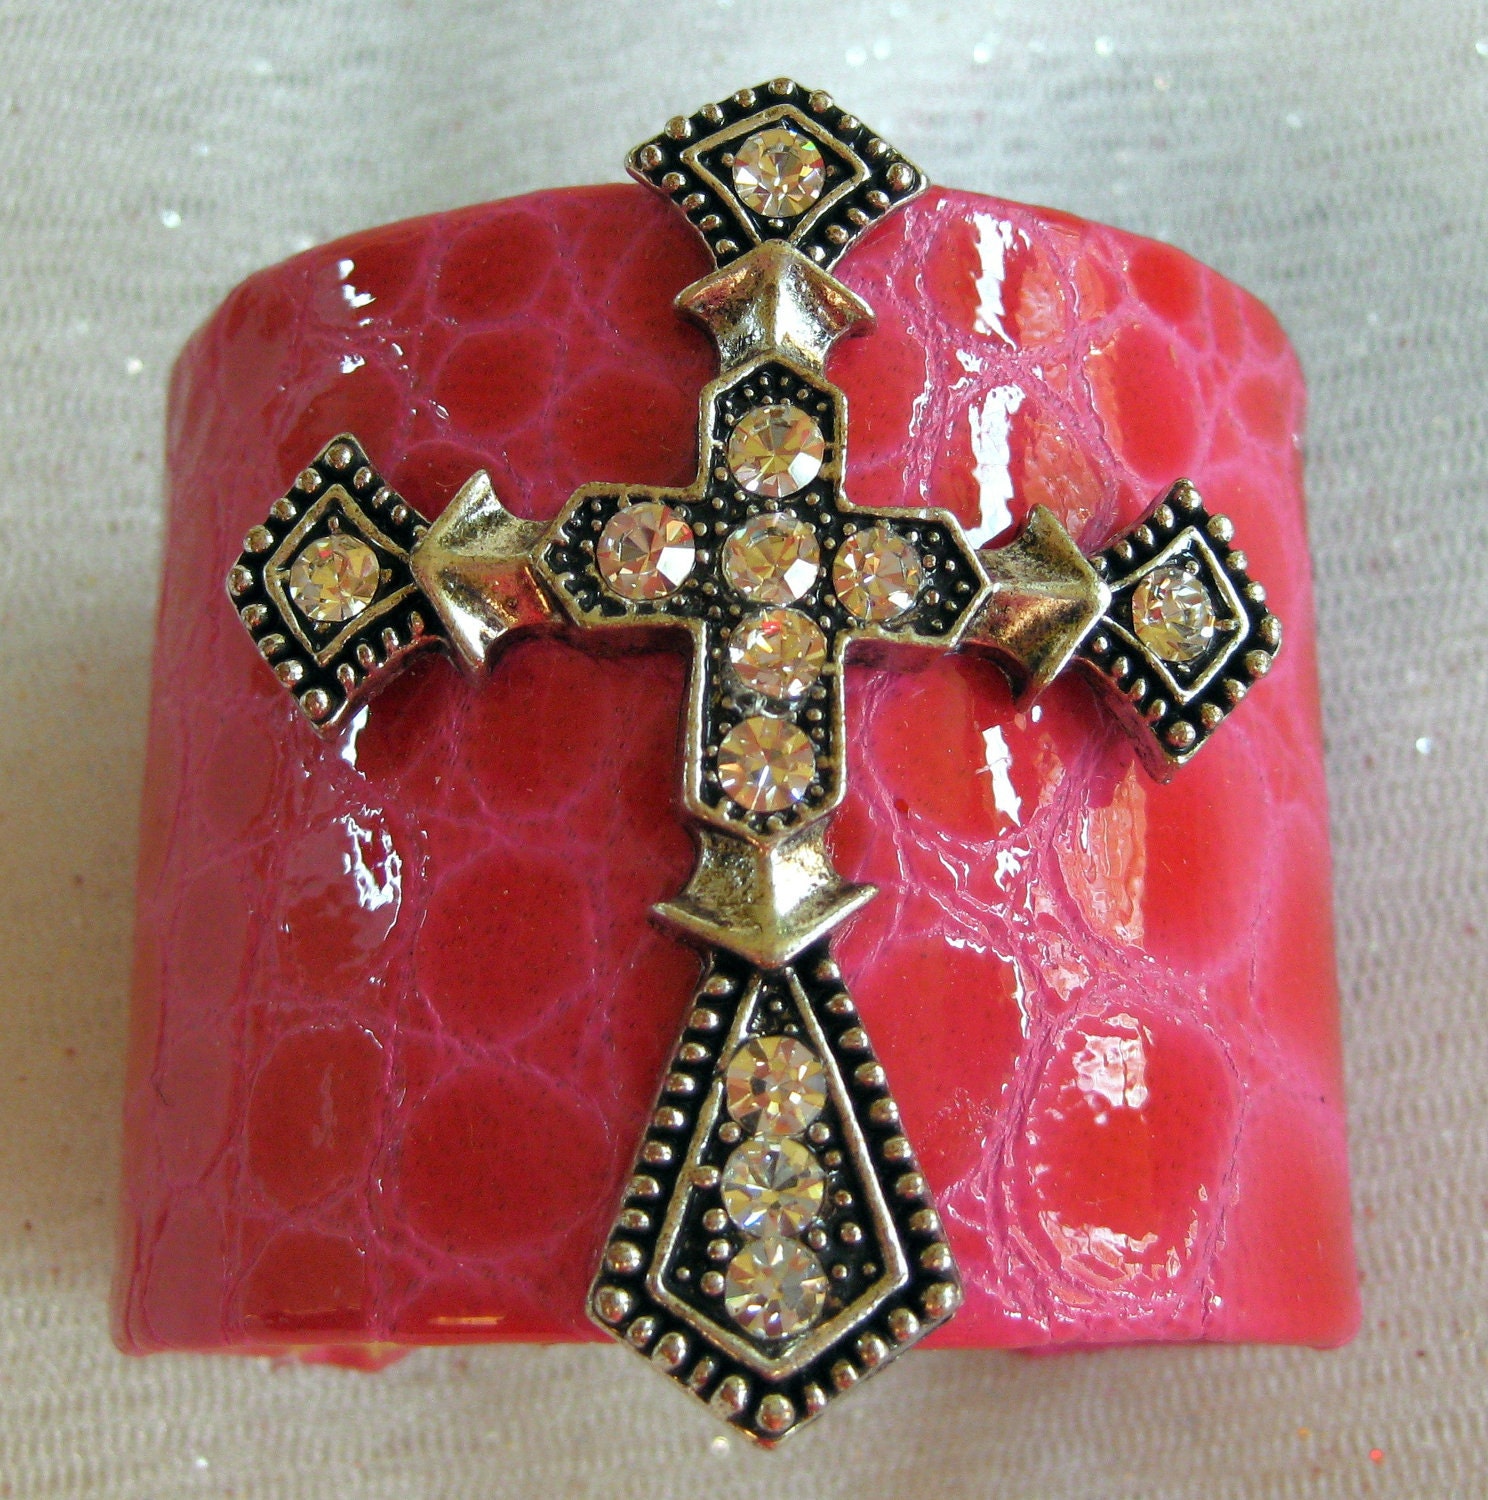 Cuff Bracelets, Sterling Silver Cuff Bracelets, Leather Bracelets,  "Cross"